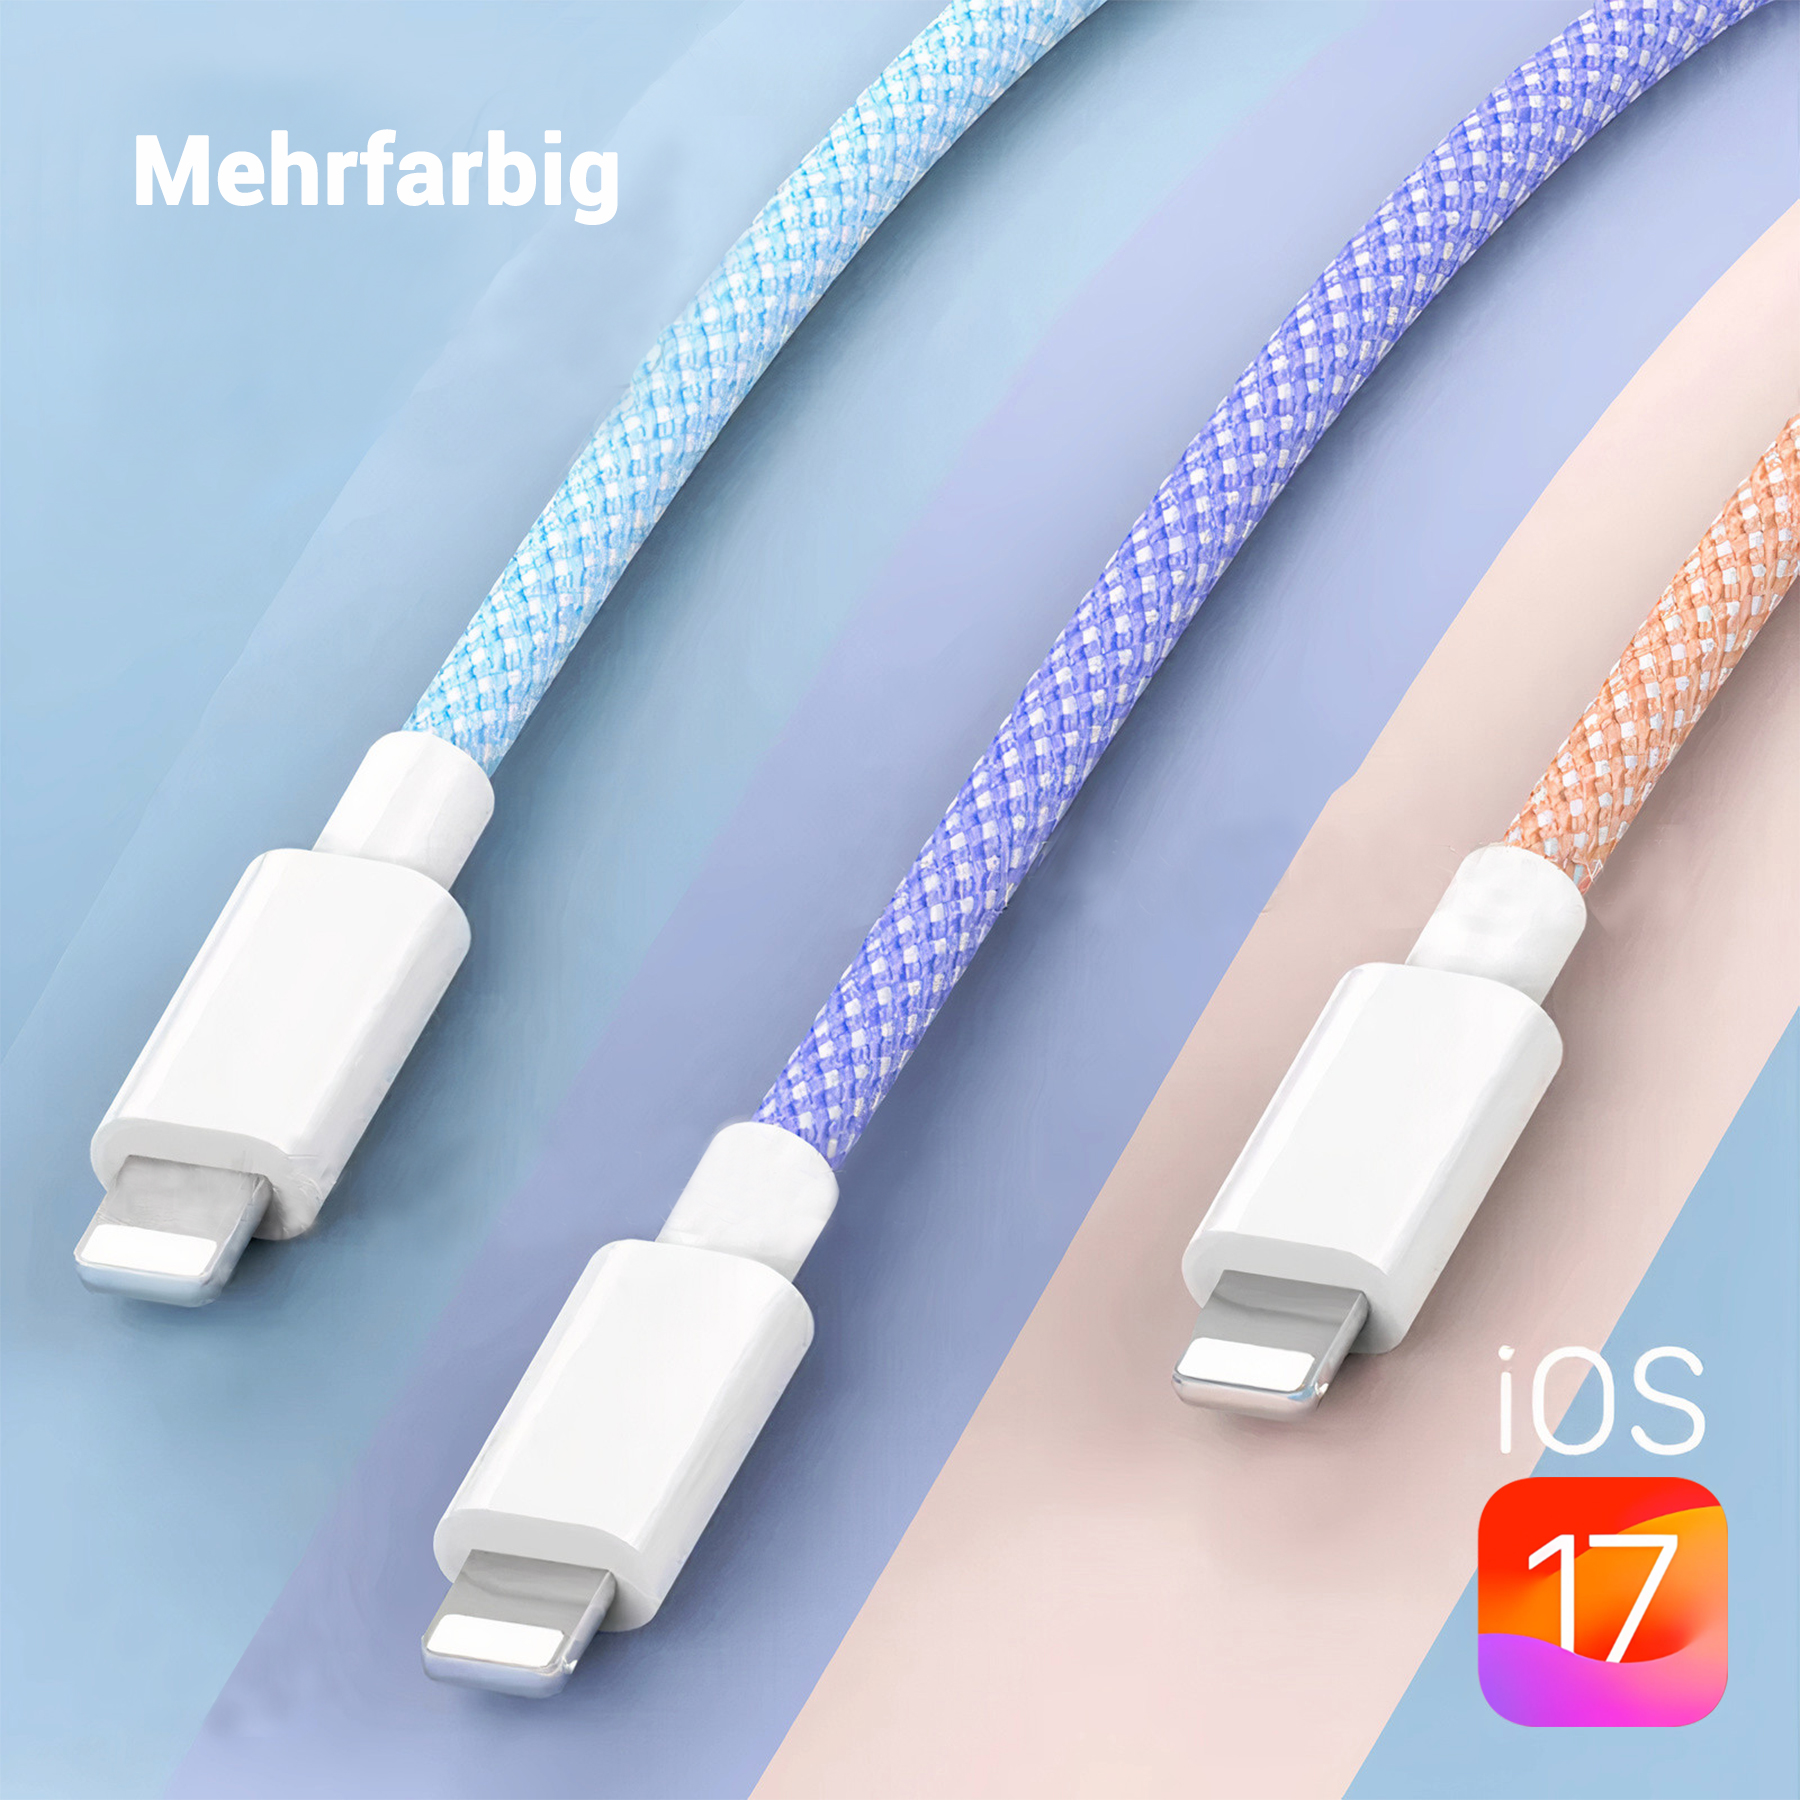 XTREMES iPhone Lightning Kabel, ladekabel Lightning Apple Datenkabel, zu ladekabel USB-C Orange iphone und (Orange), USB-C iphone m, 2 Datenkabel und